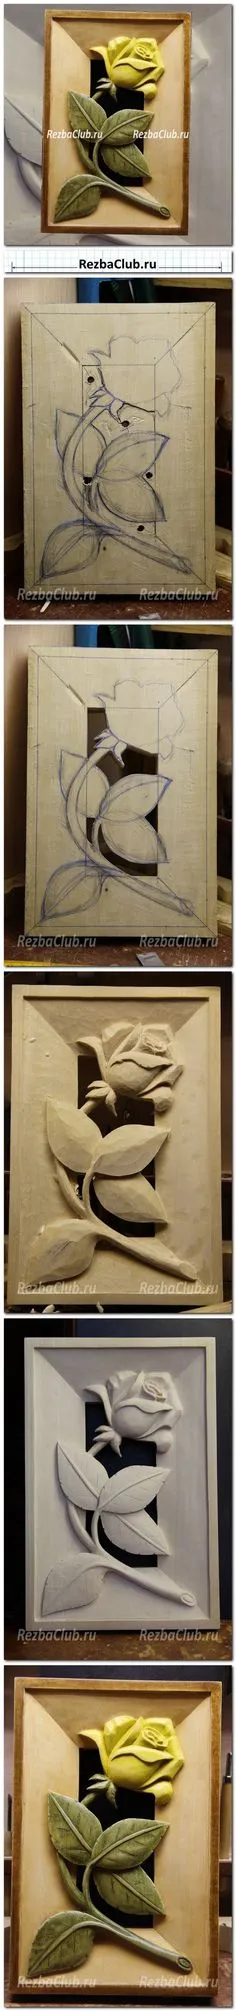 Инструкция как вырезать розу из дерева на рамке Intarsia, Fungi, Wood Carving, Projects To Try, Woodworking, Valentines, Flowers, Artwork